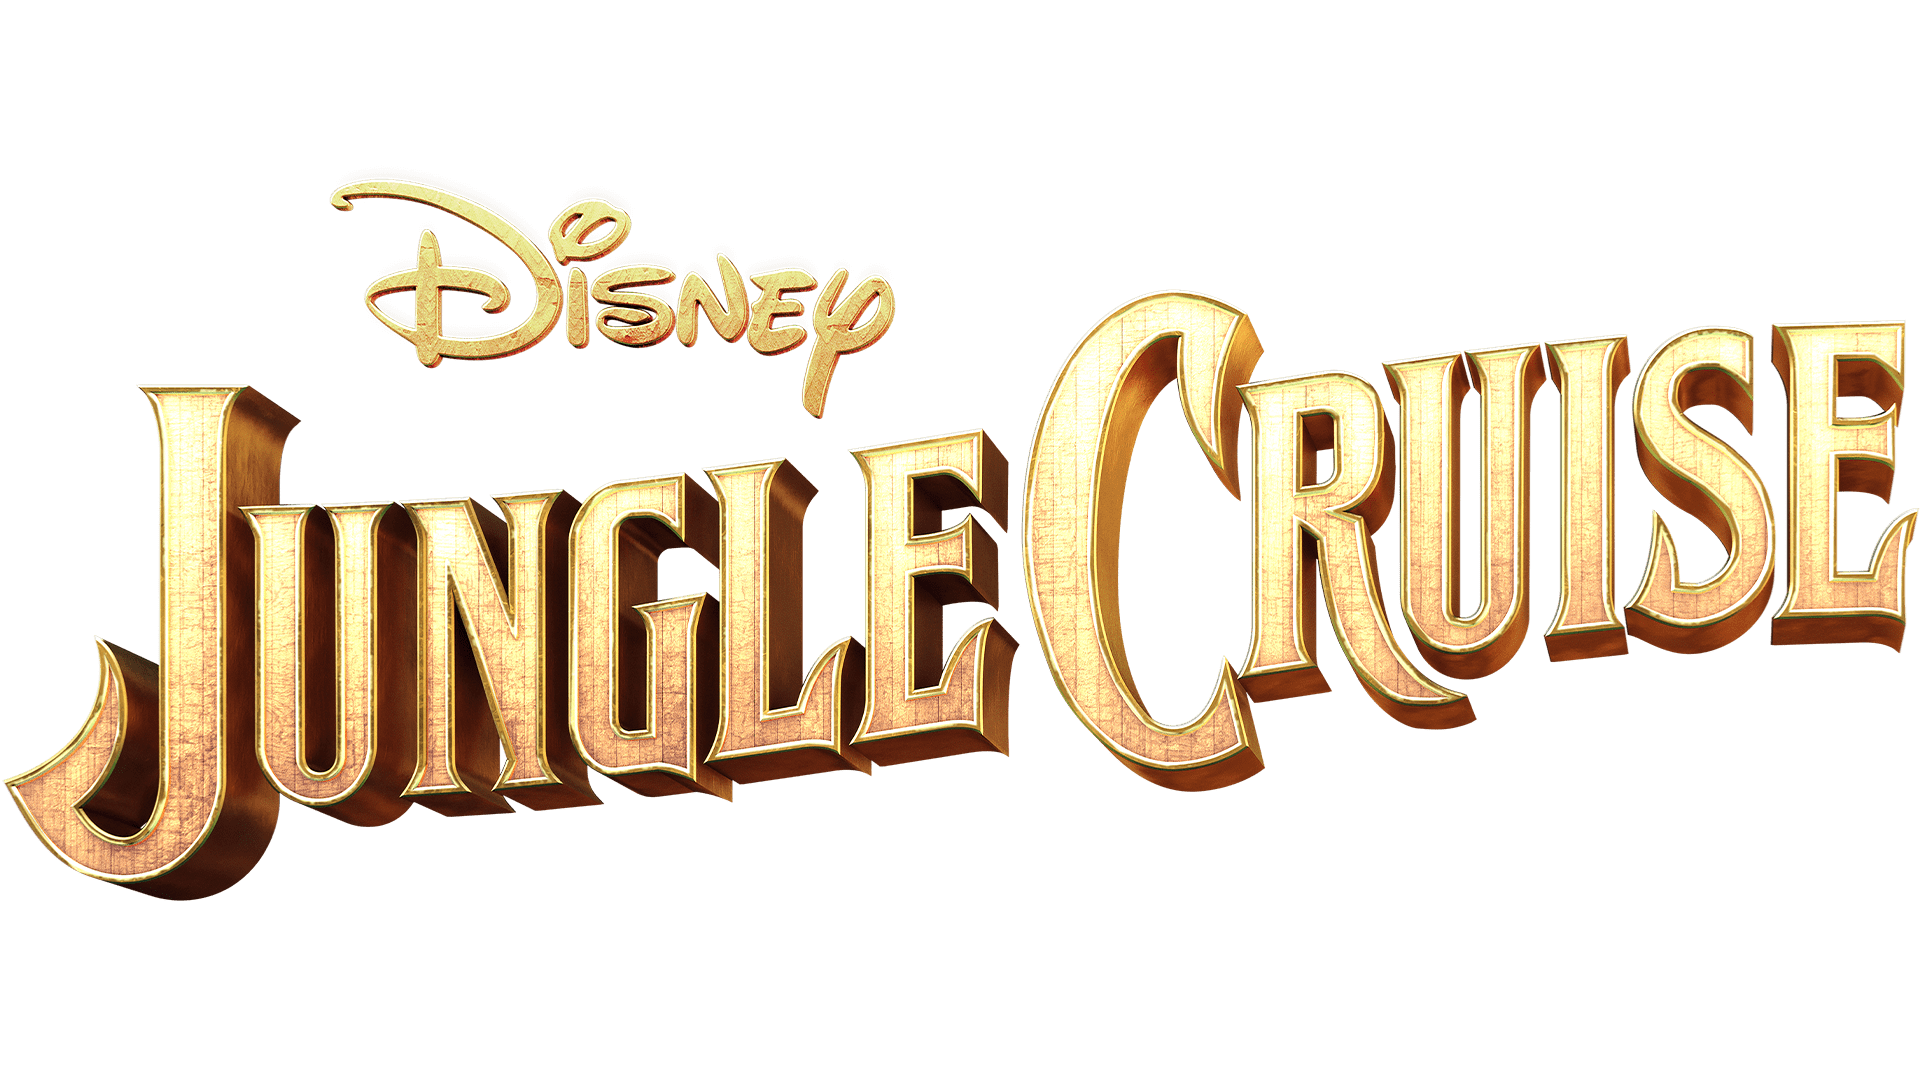 Cruise movie jungle watch online full Watch Jungle